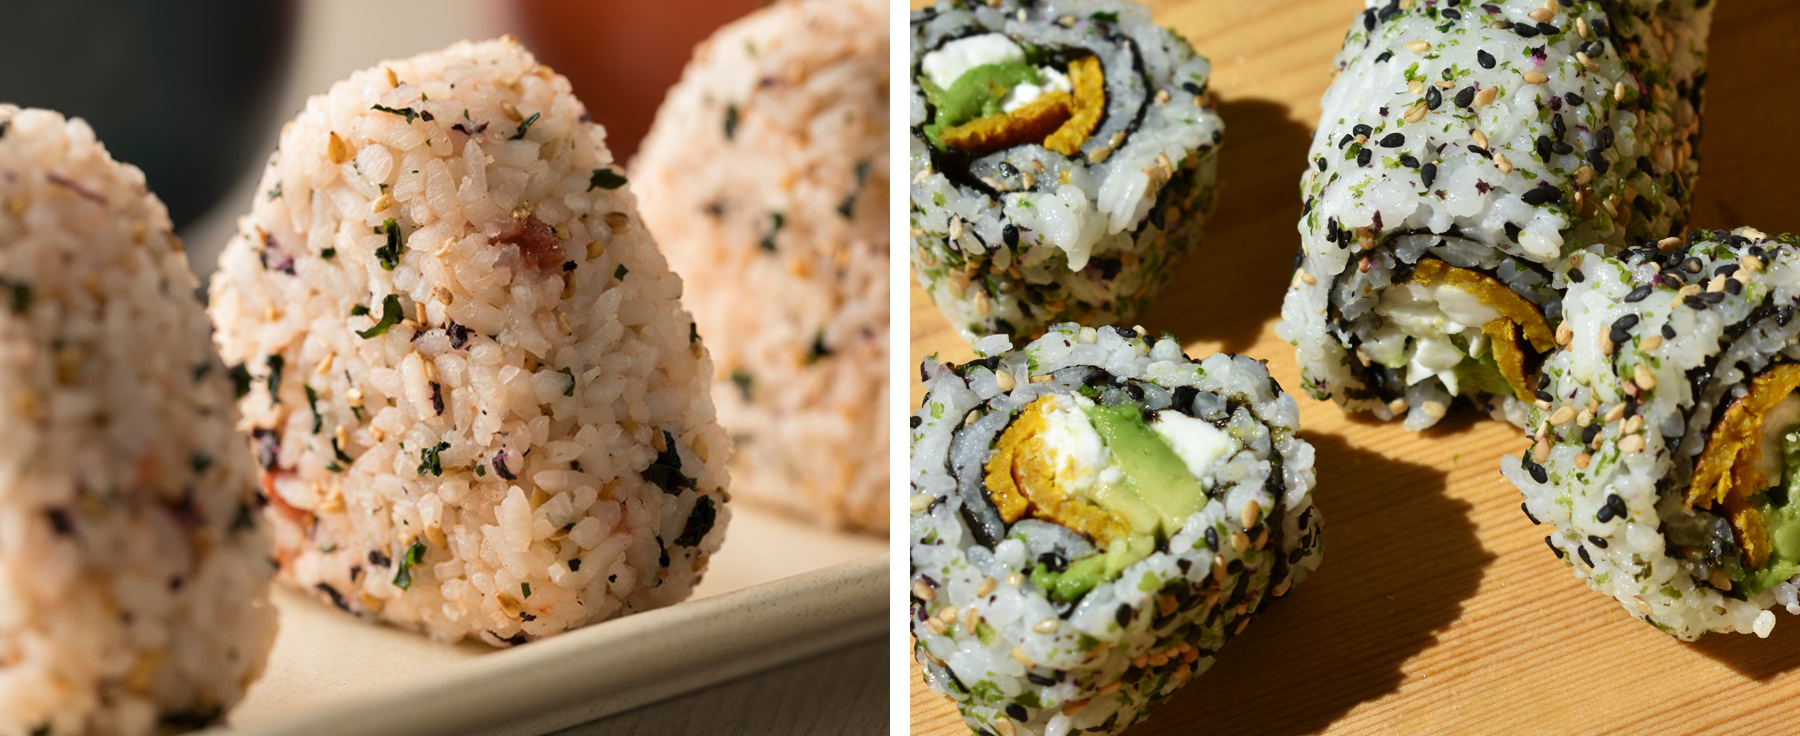 furikake in onigiri and sushi rolls